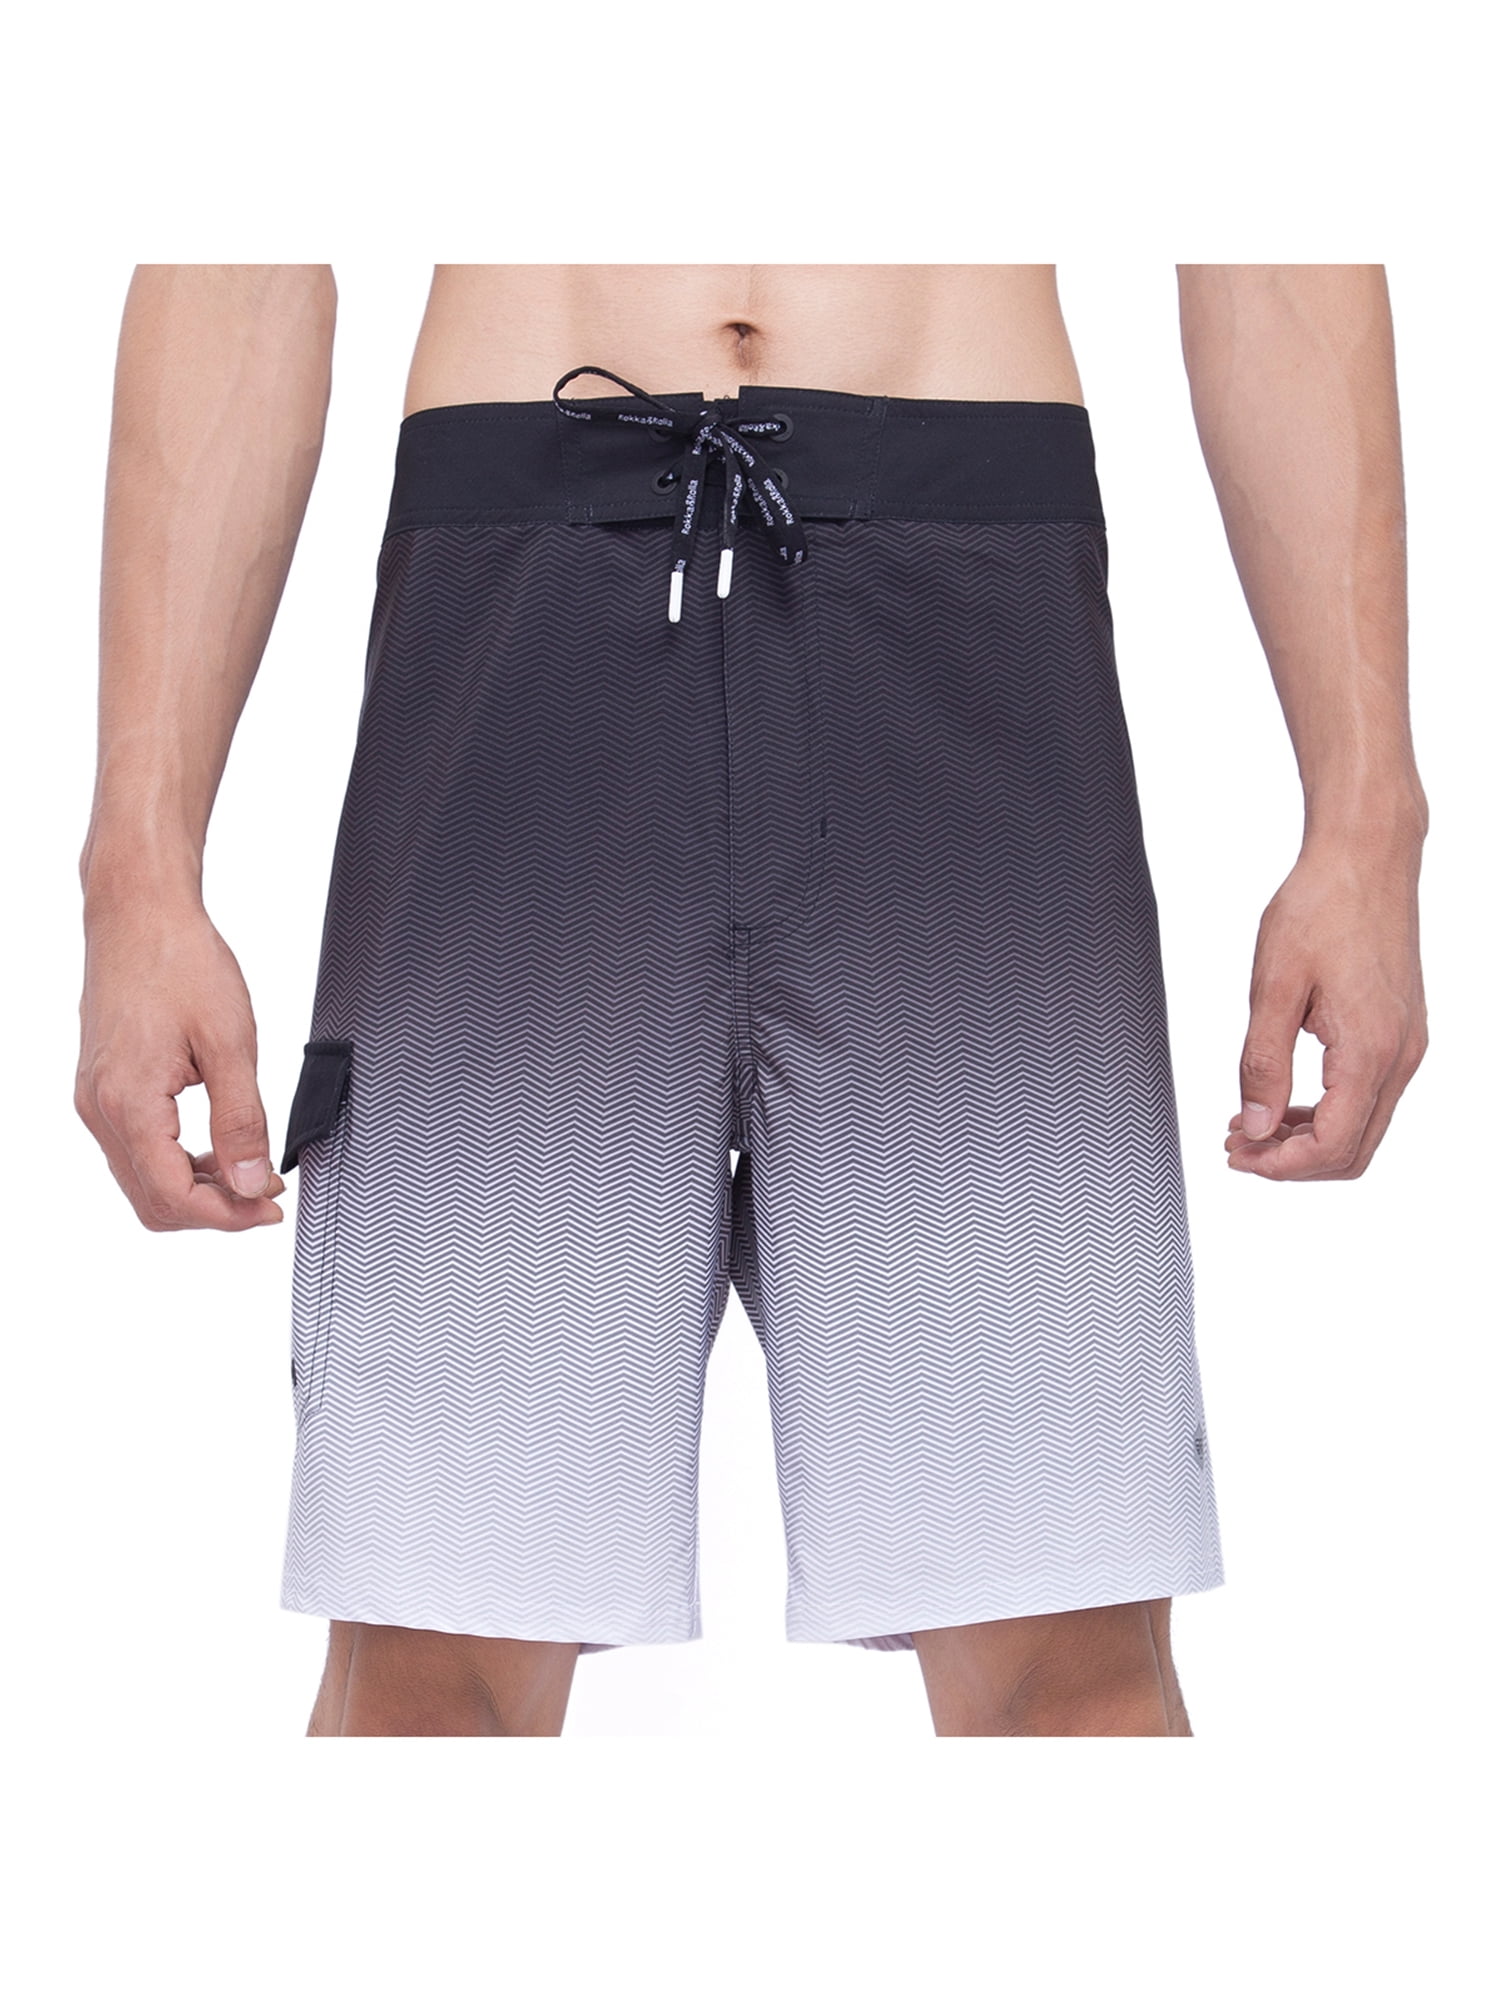 Norty Mens Swim Trunks - Watershort Swimsuit - Cargo Pockets - Drawstr –  The Norty Brand